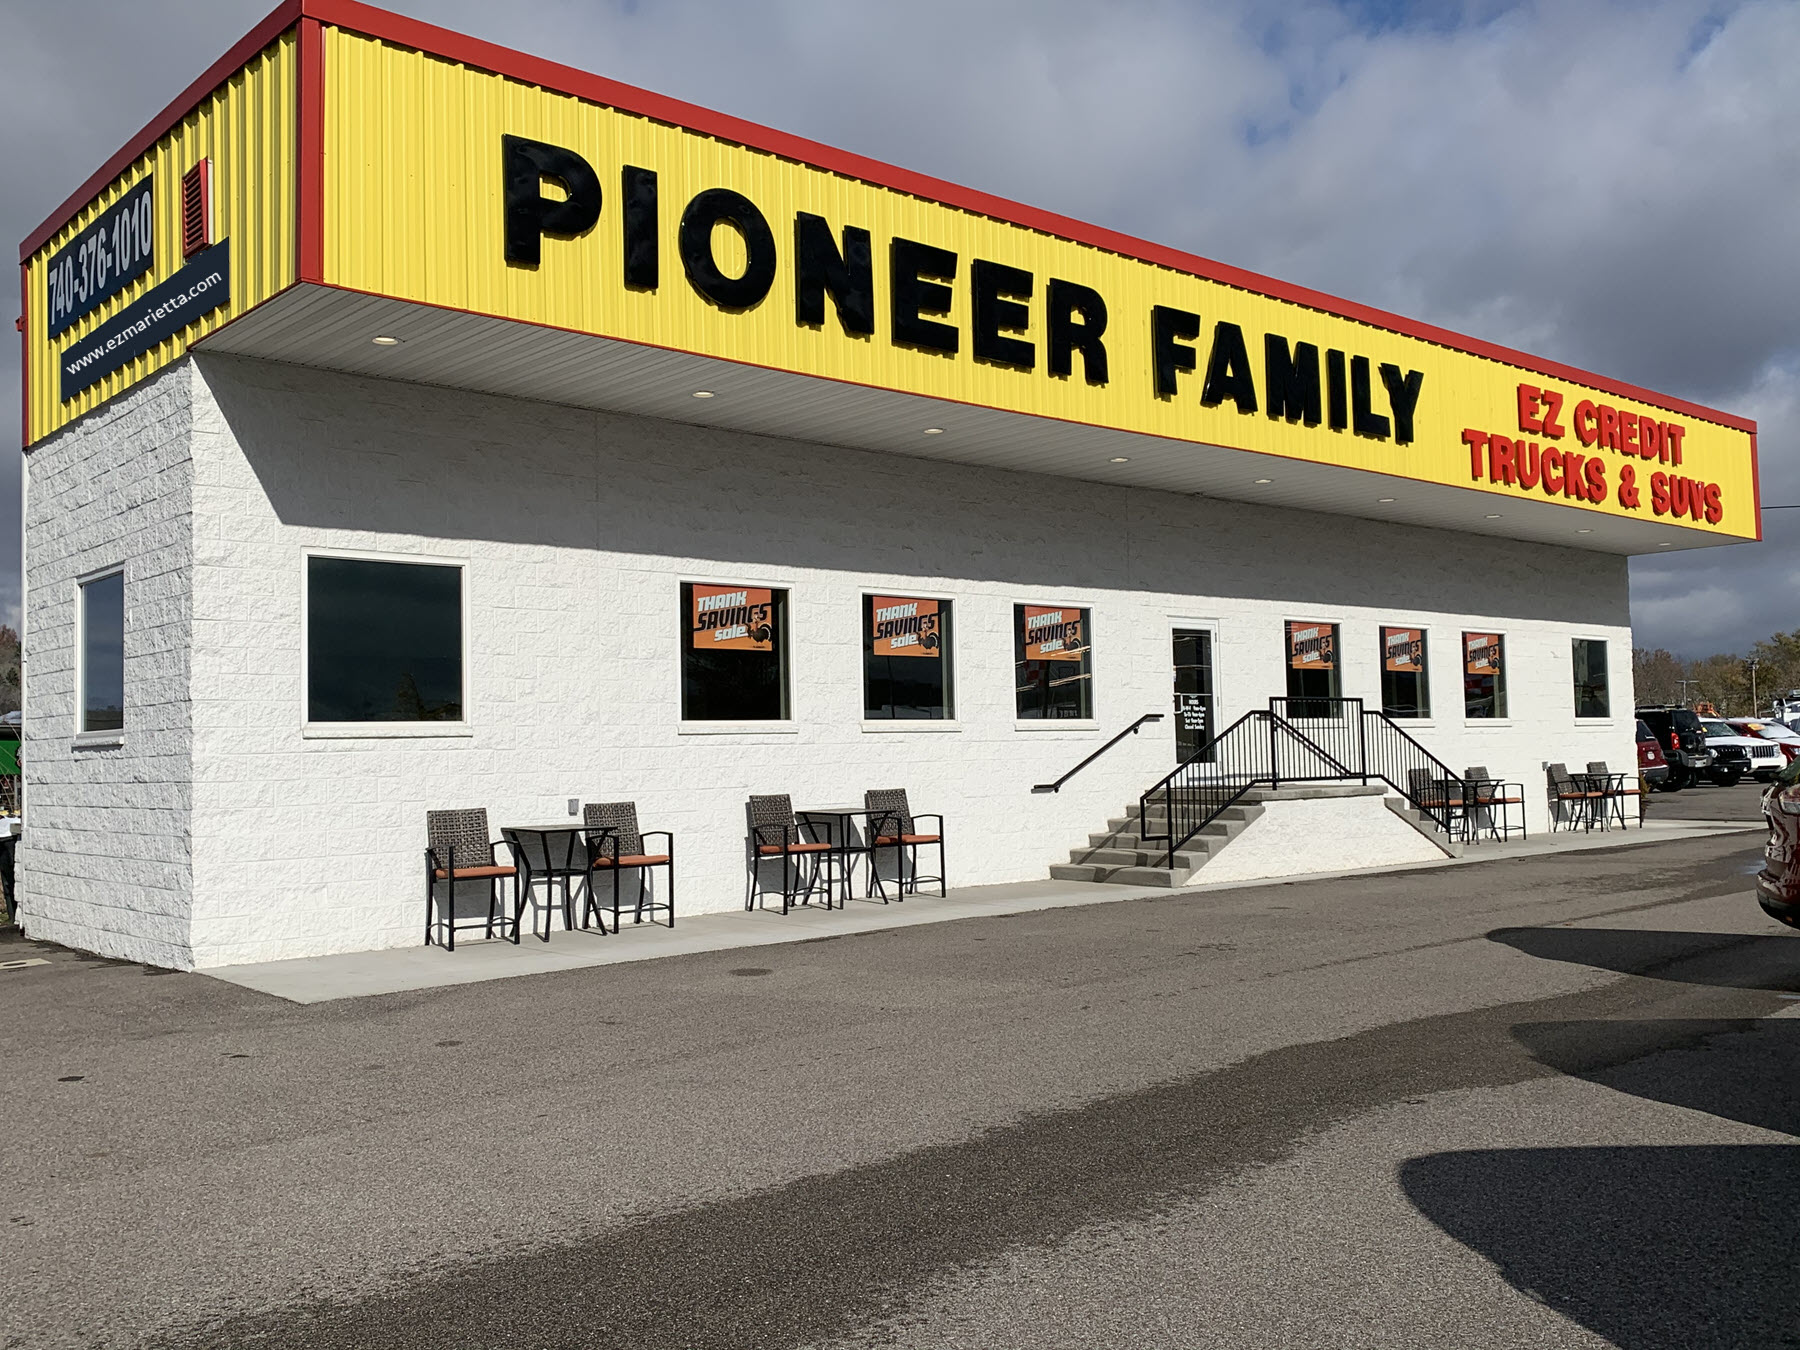 Pioneer-Family EZ Credit Trucks & SUVs